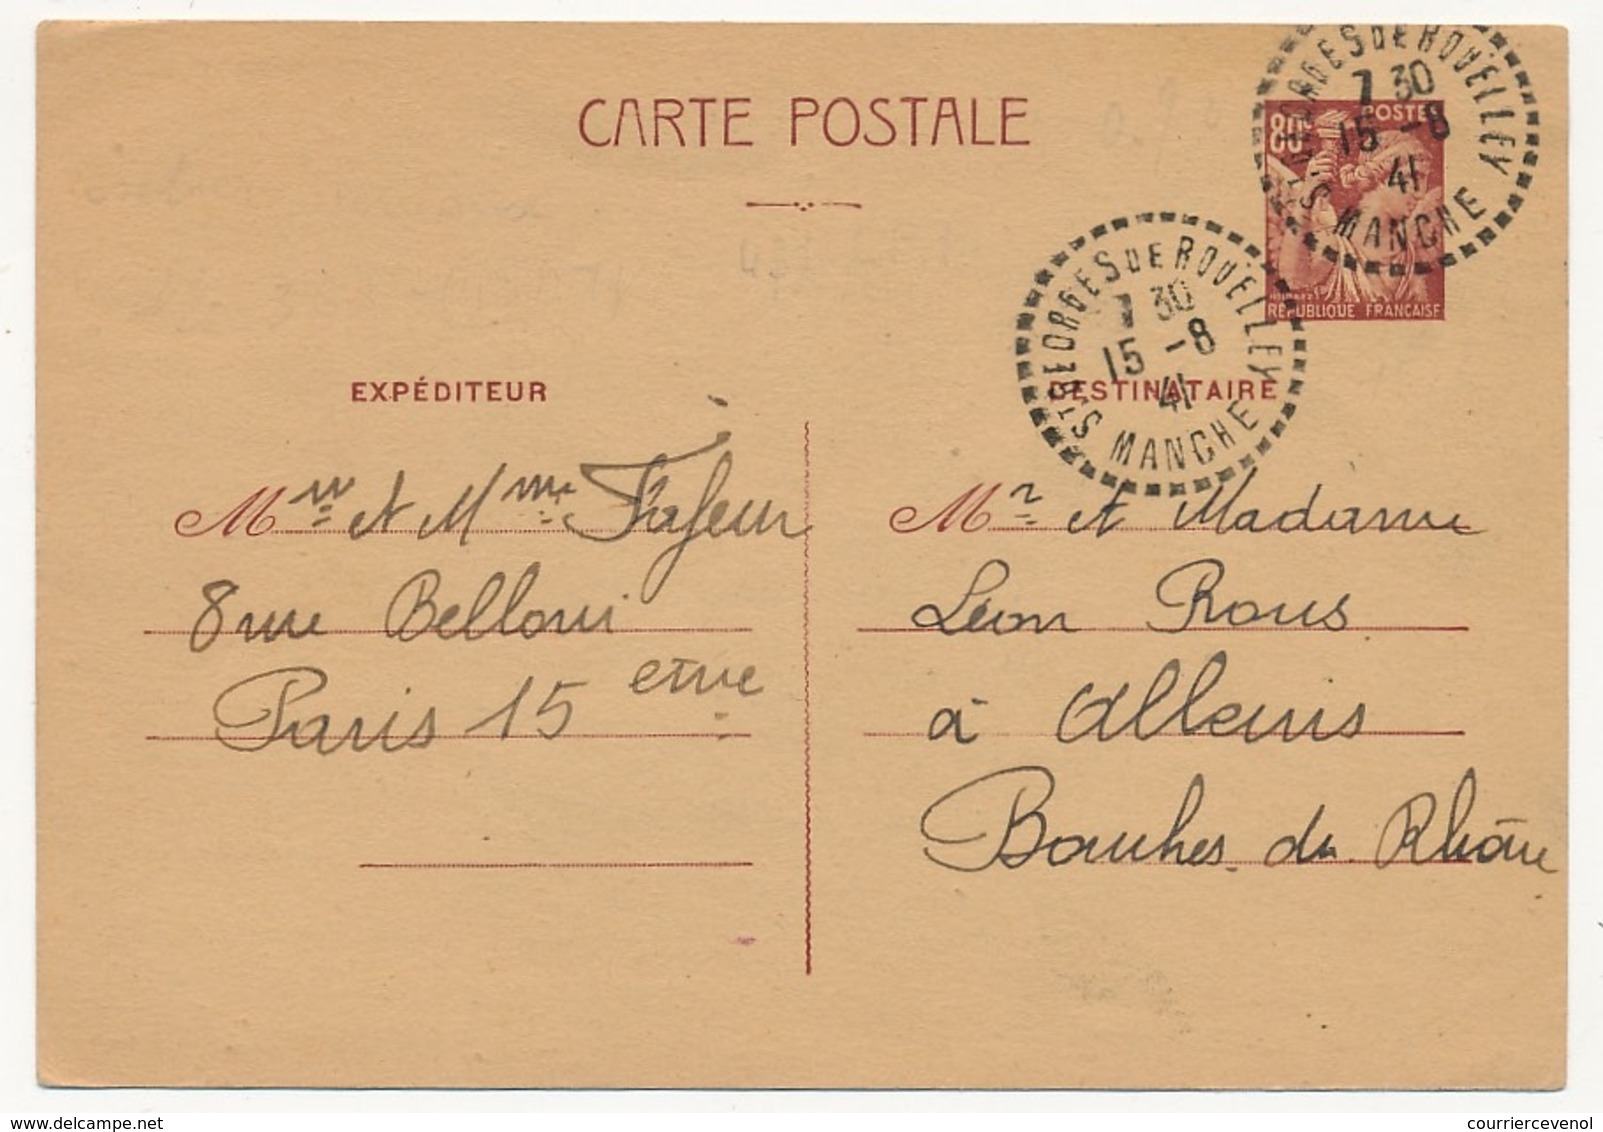 FRANCE - CP 80c Type Iris - Cachet Tireté St Georges De Rouelley - 1941 - Standard Postcards & Stamped On Demand (before 1995)